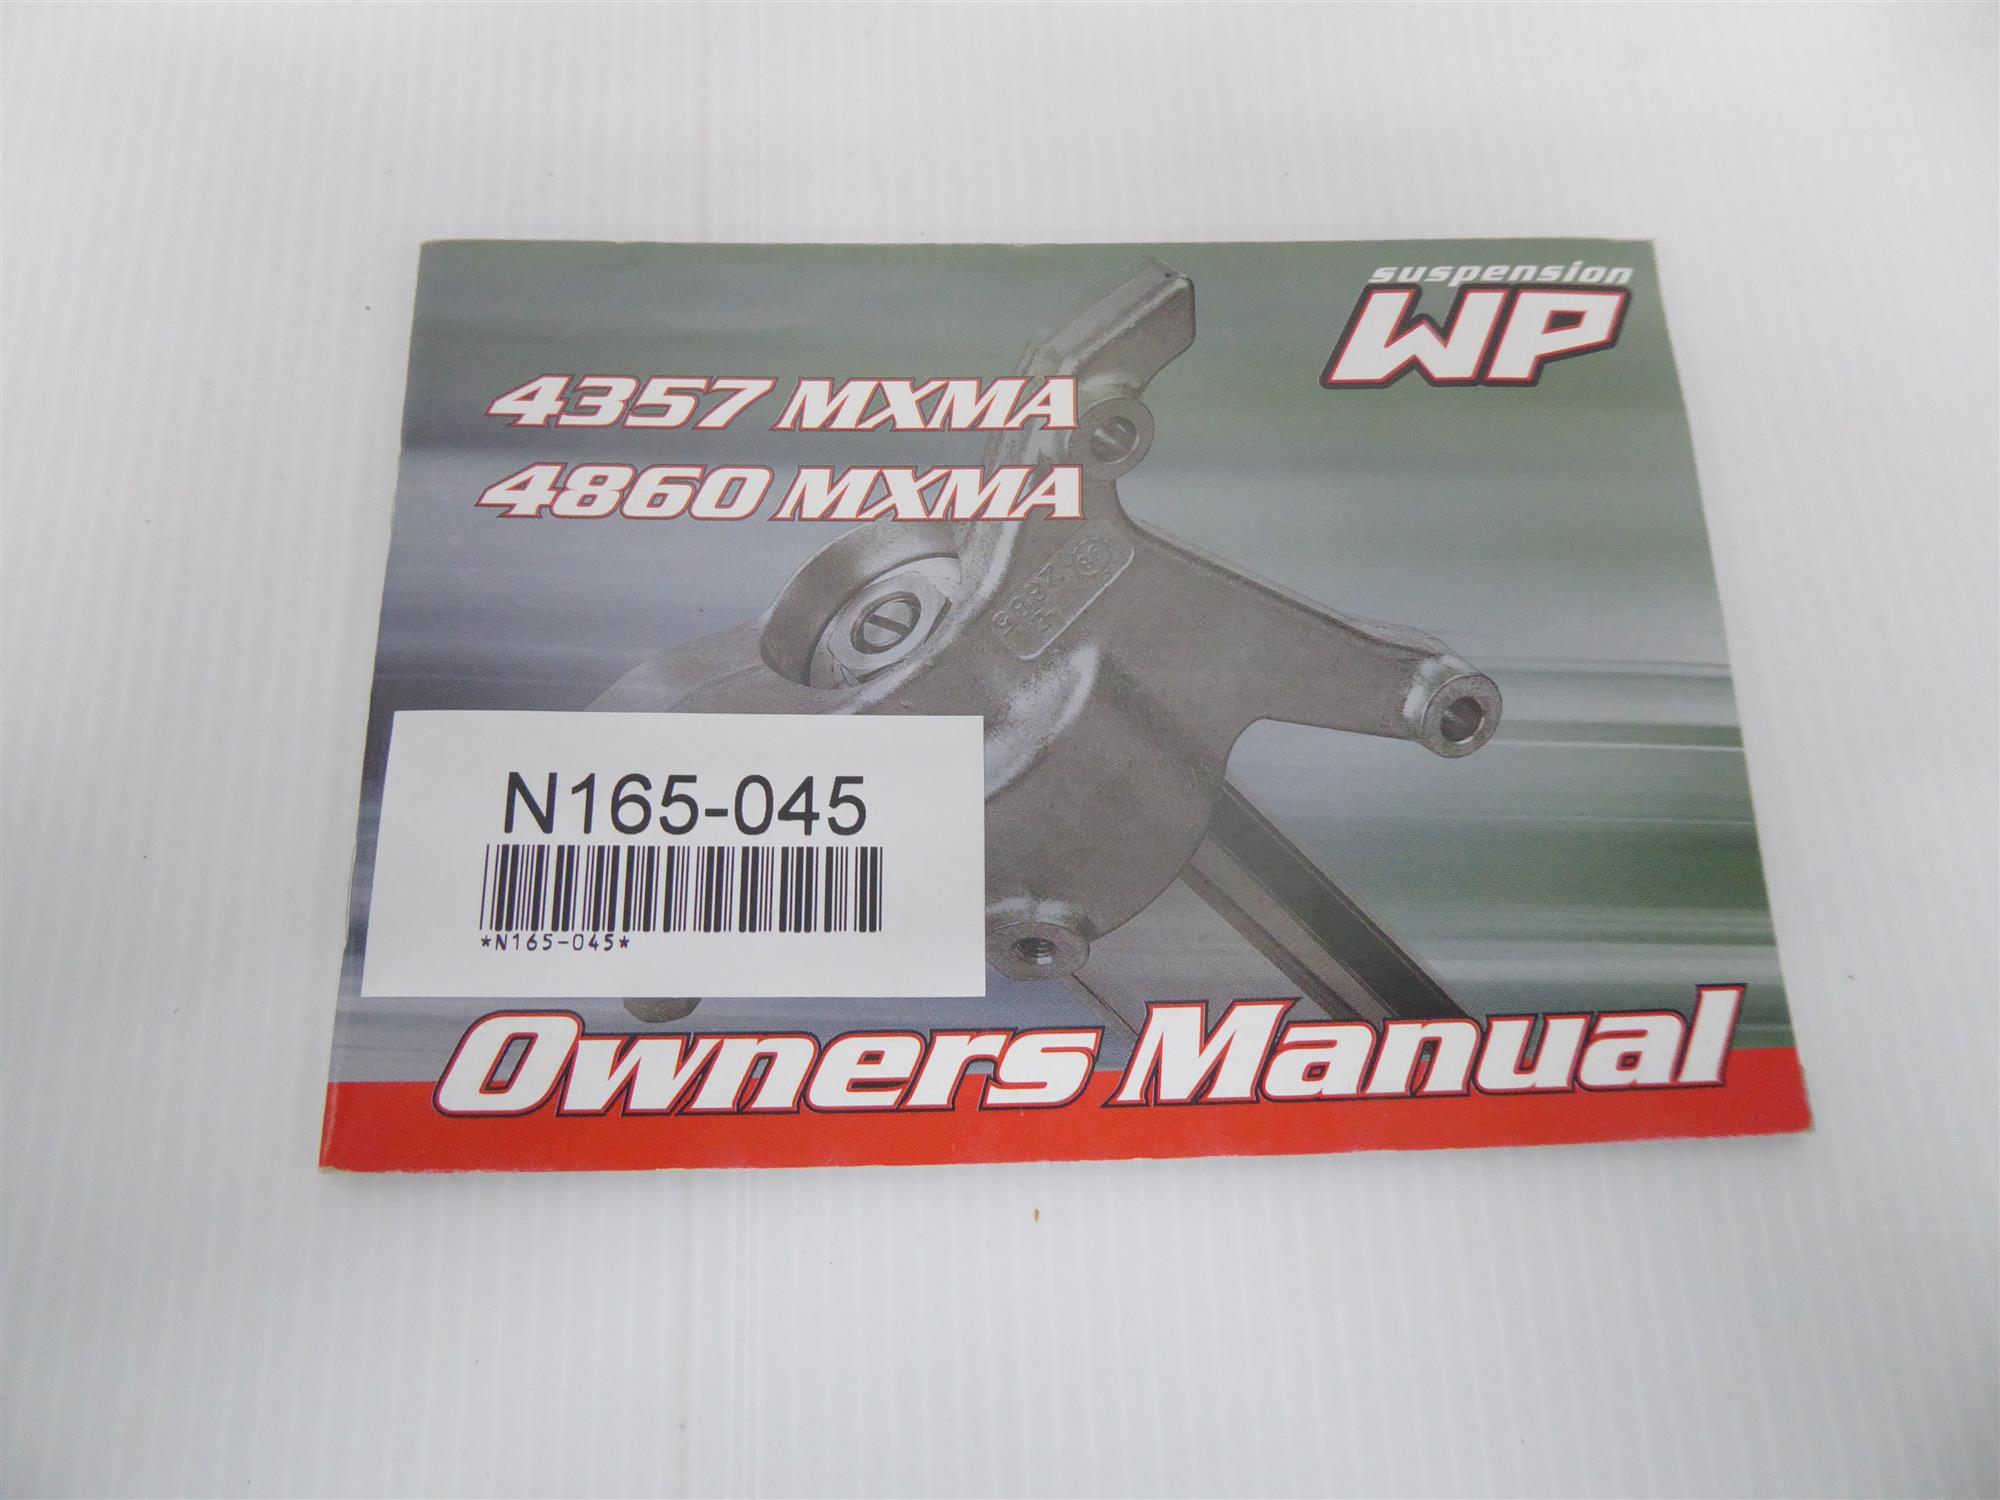 WP 4860 4357 MXMA Owners Manual 53000053